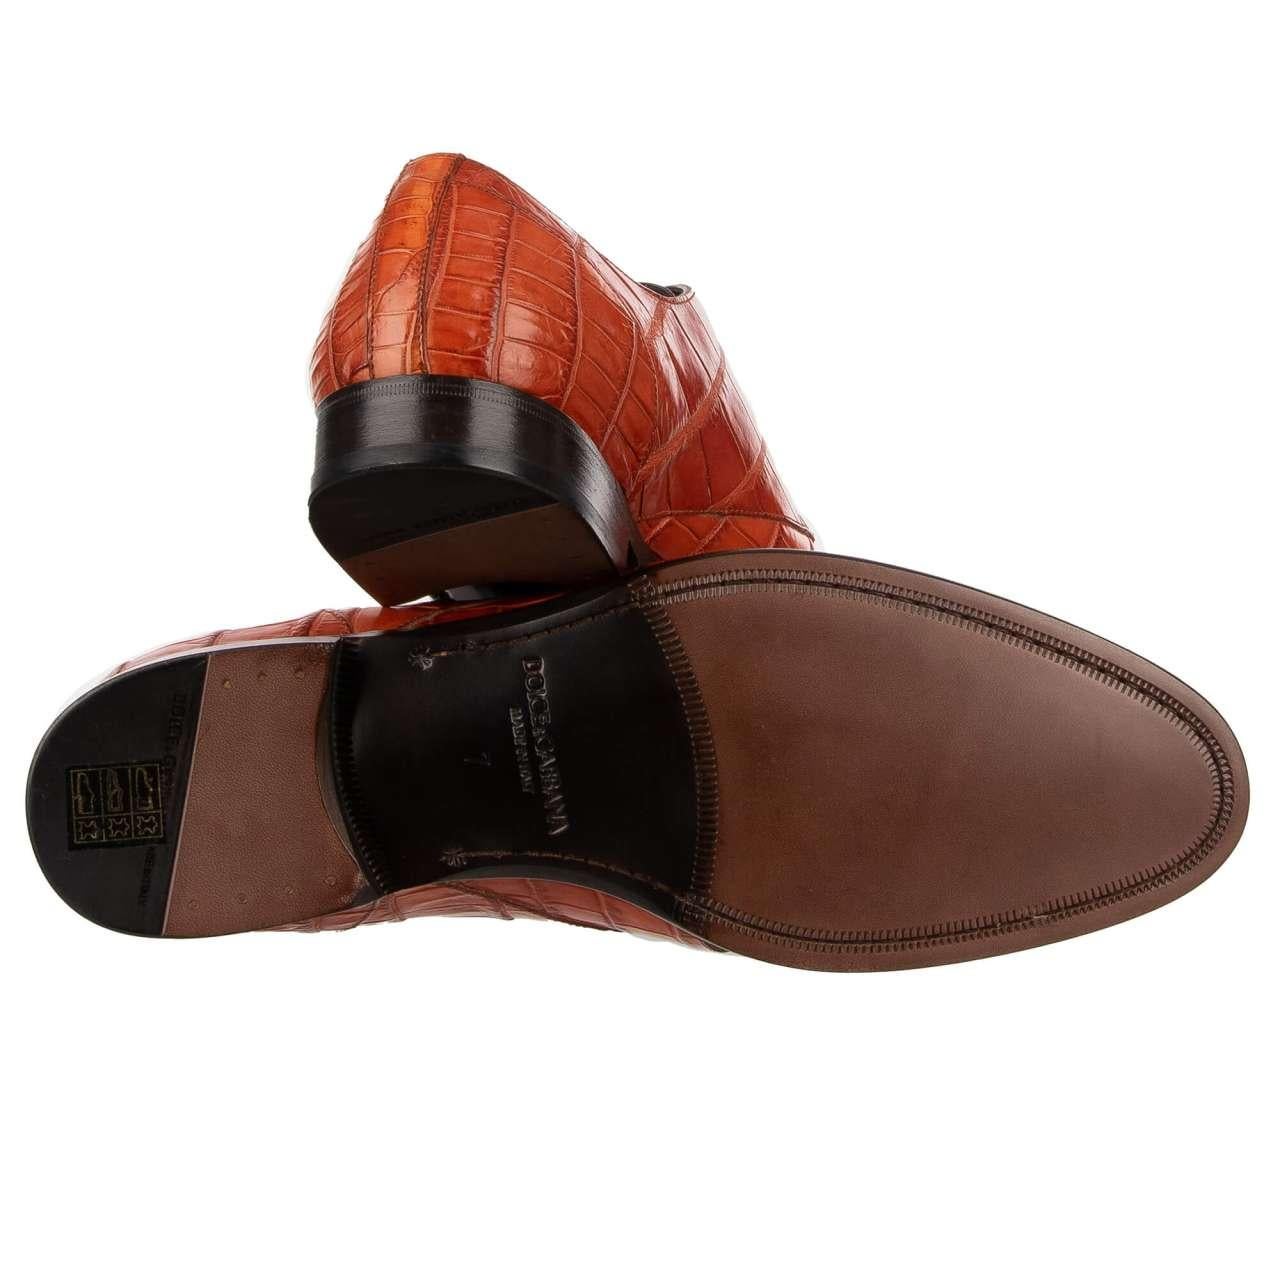 Dolce & Gabbana Formal Crocodile Leather Derby Shoes NAPOLI Orange EUR 41 For Sale 1